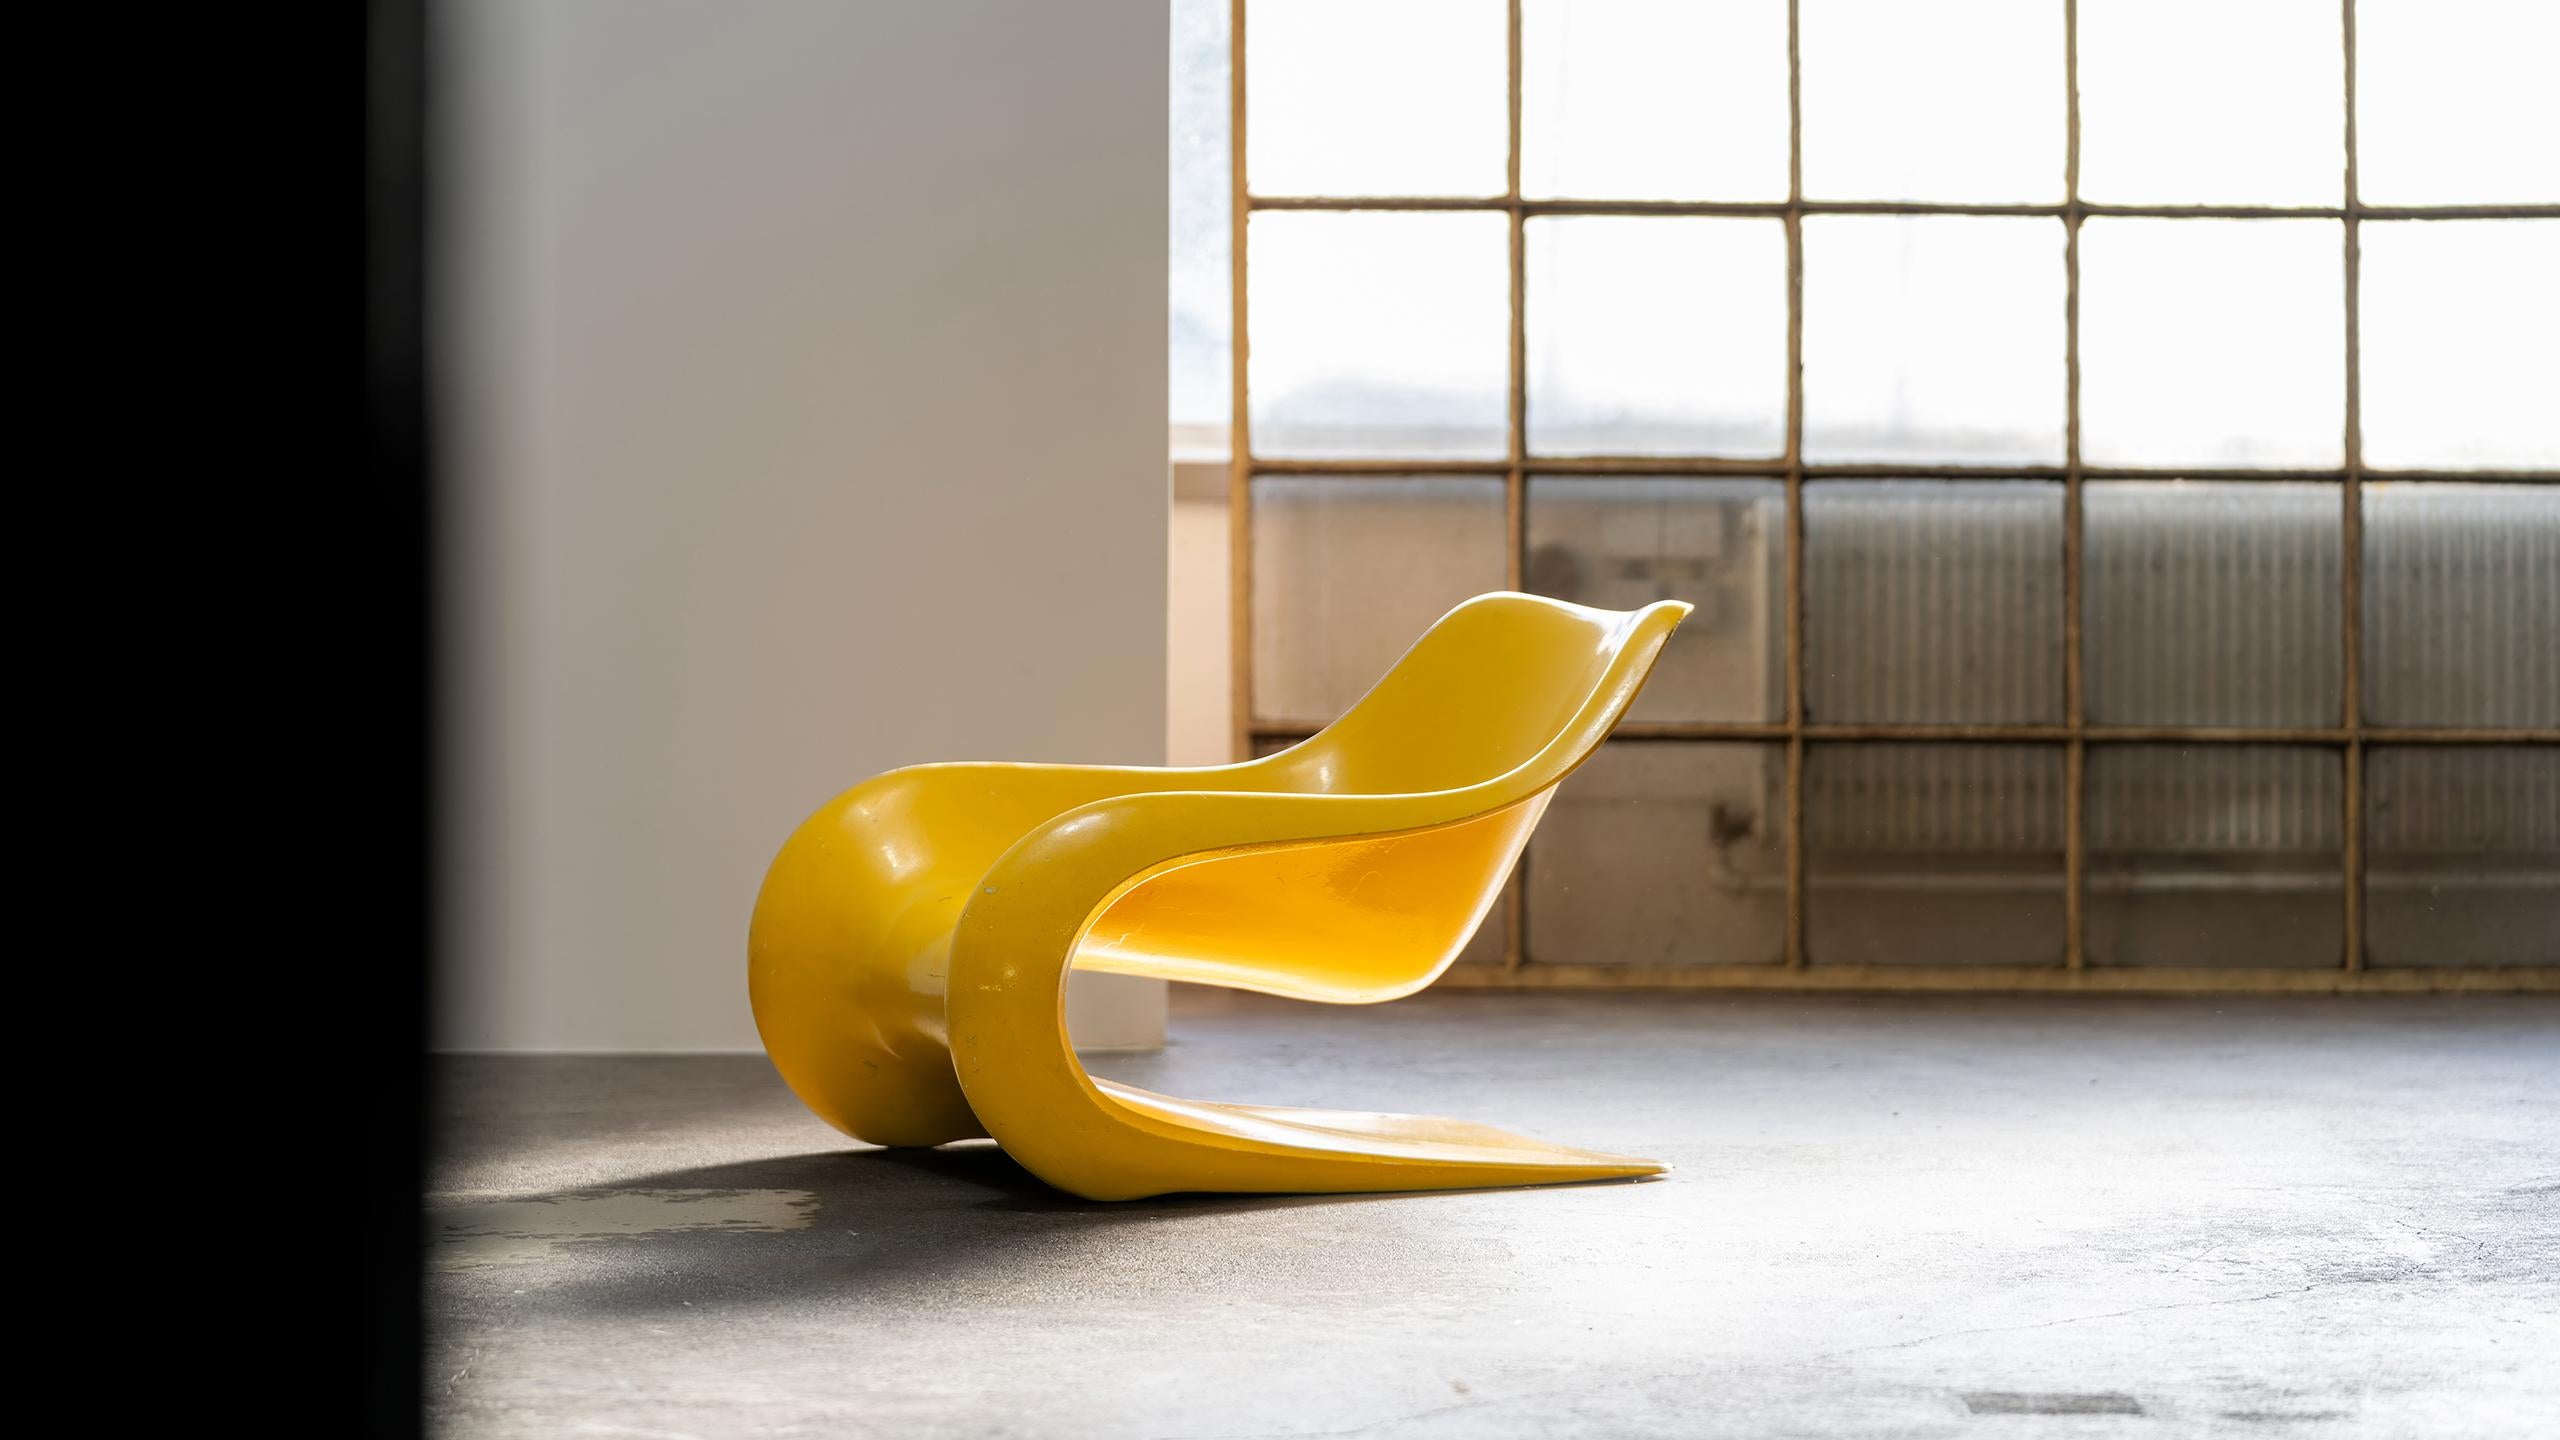 Organic Modern Targa Chair by Klaus Uredat, 19709 for Horn Collection, Germany - Organic Design